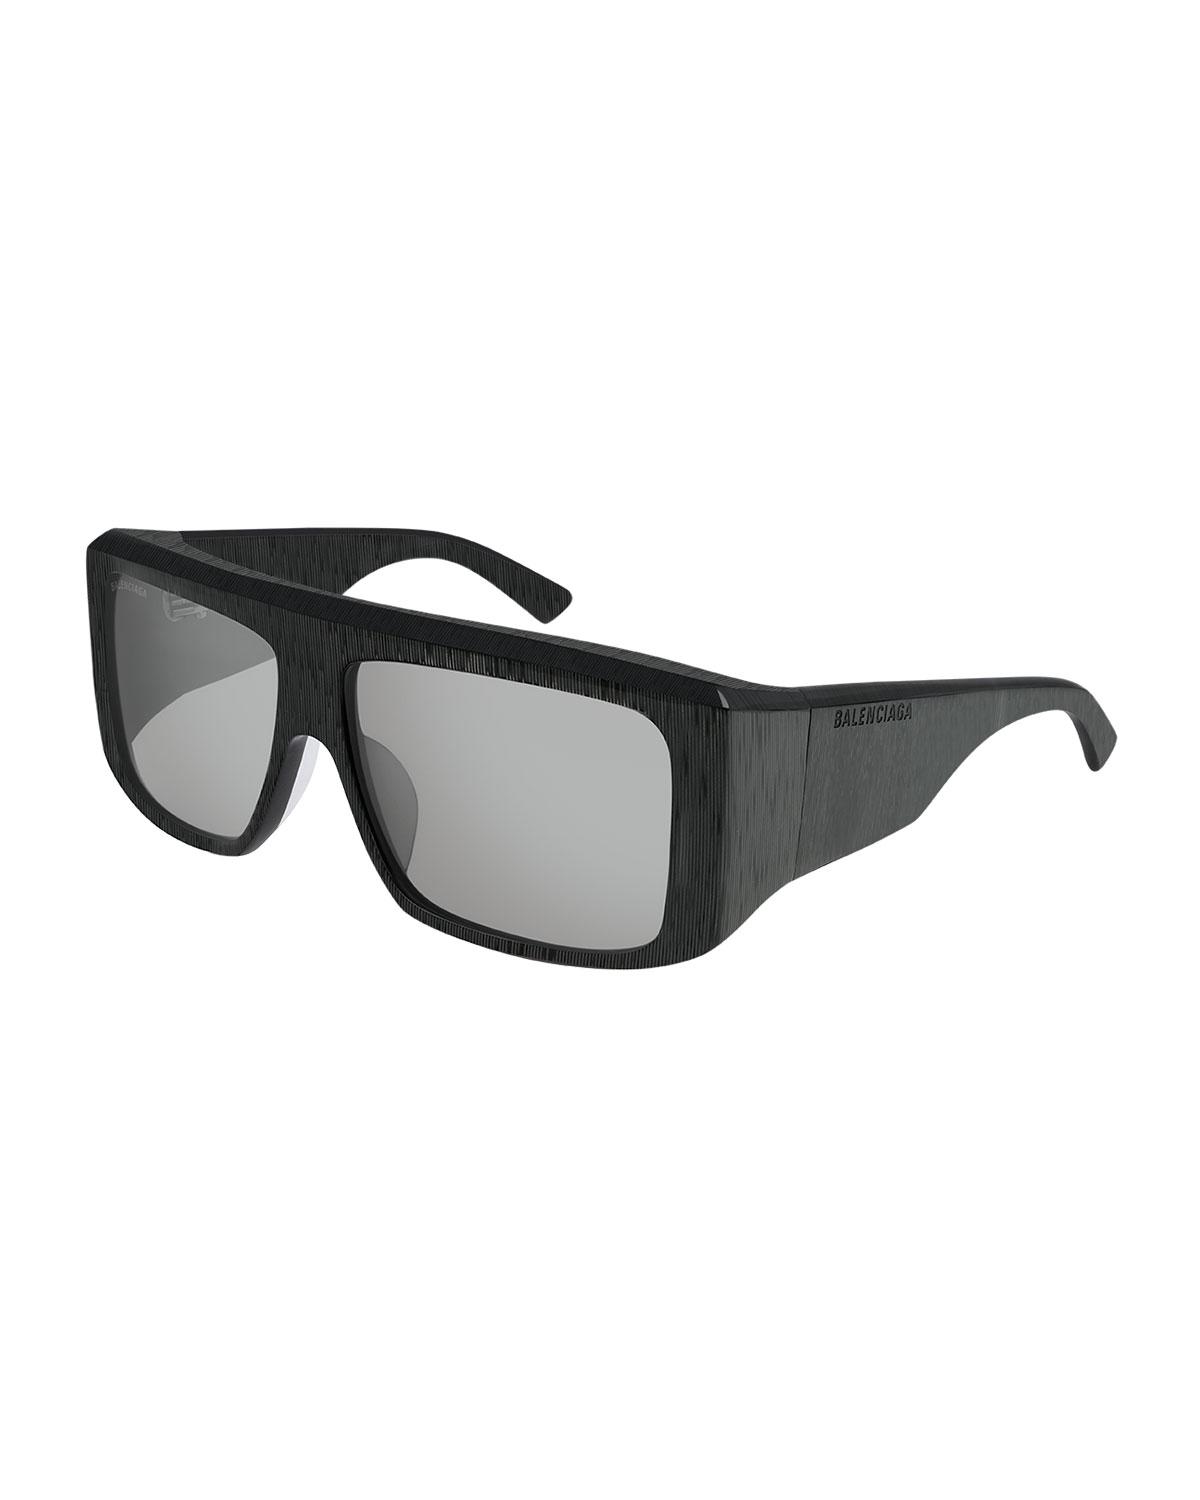 Lyst - Balenciaga Men's Flat-top Acetate Sunglasses in Black for Men